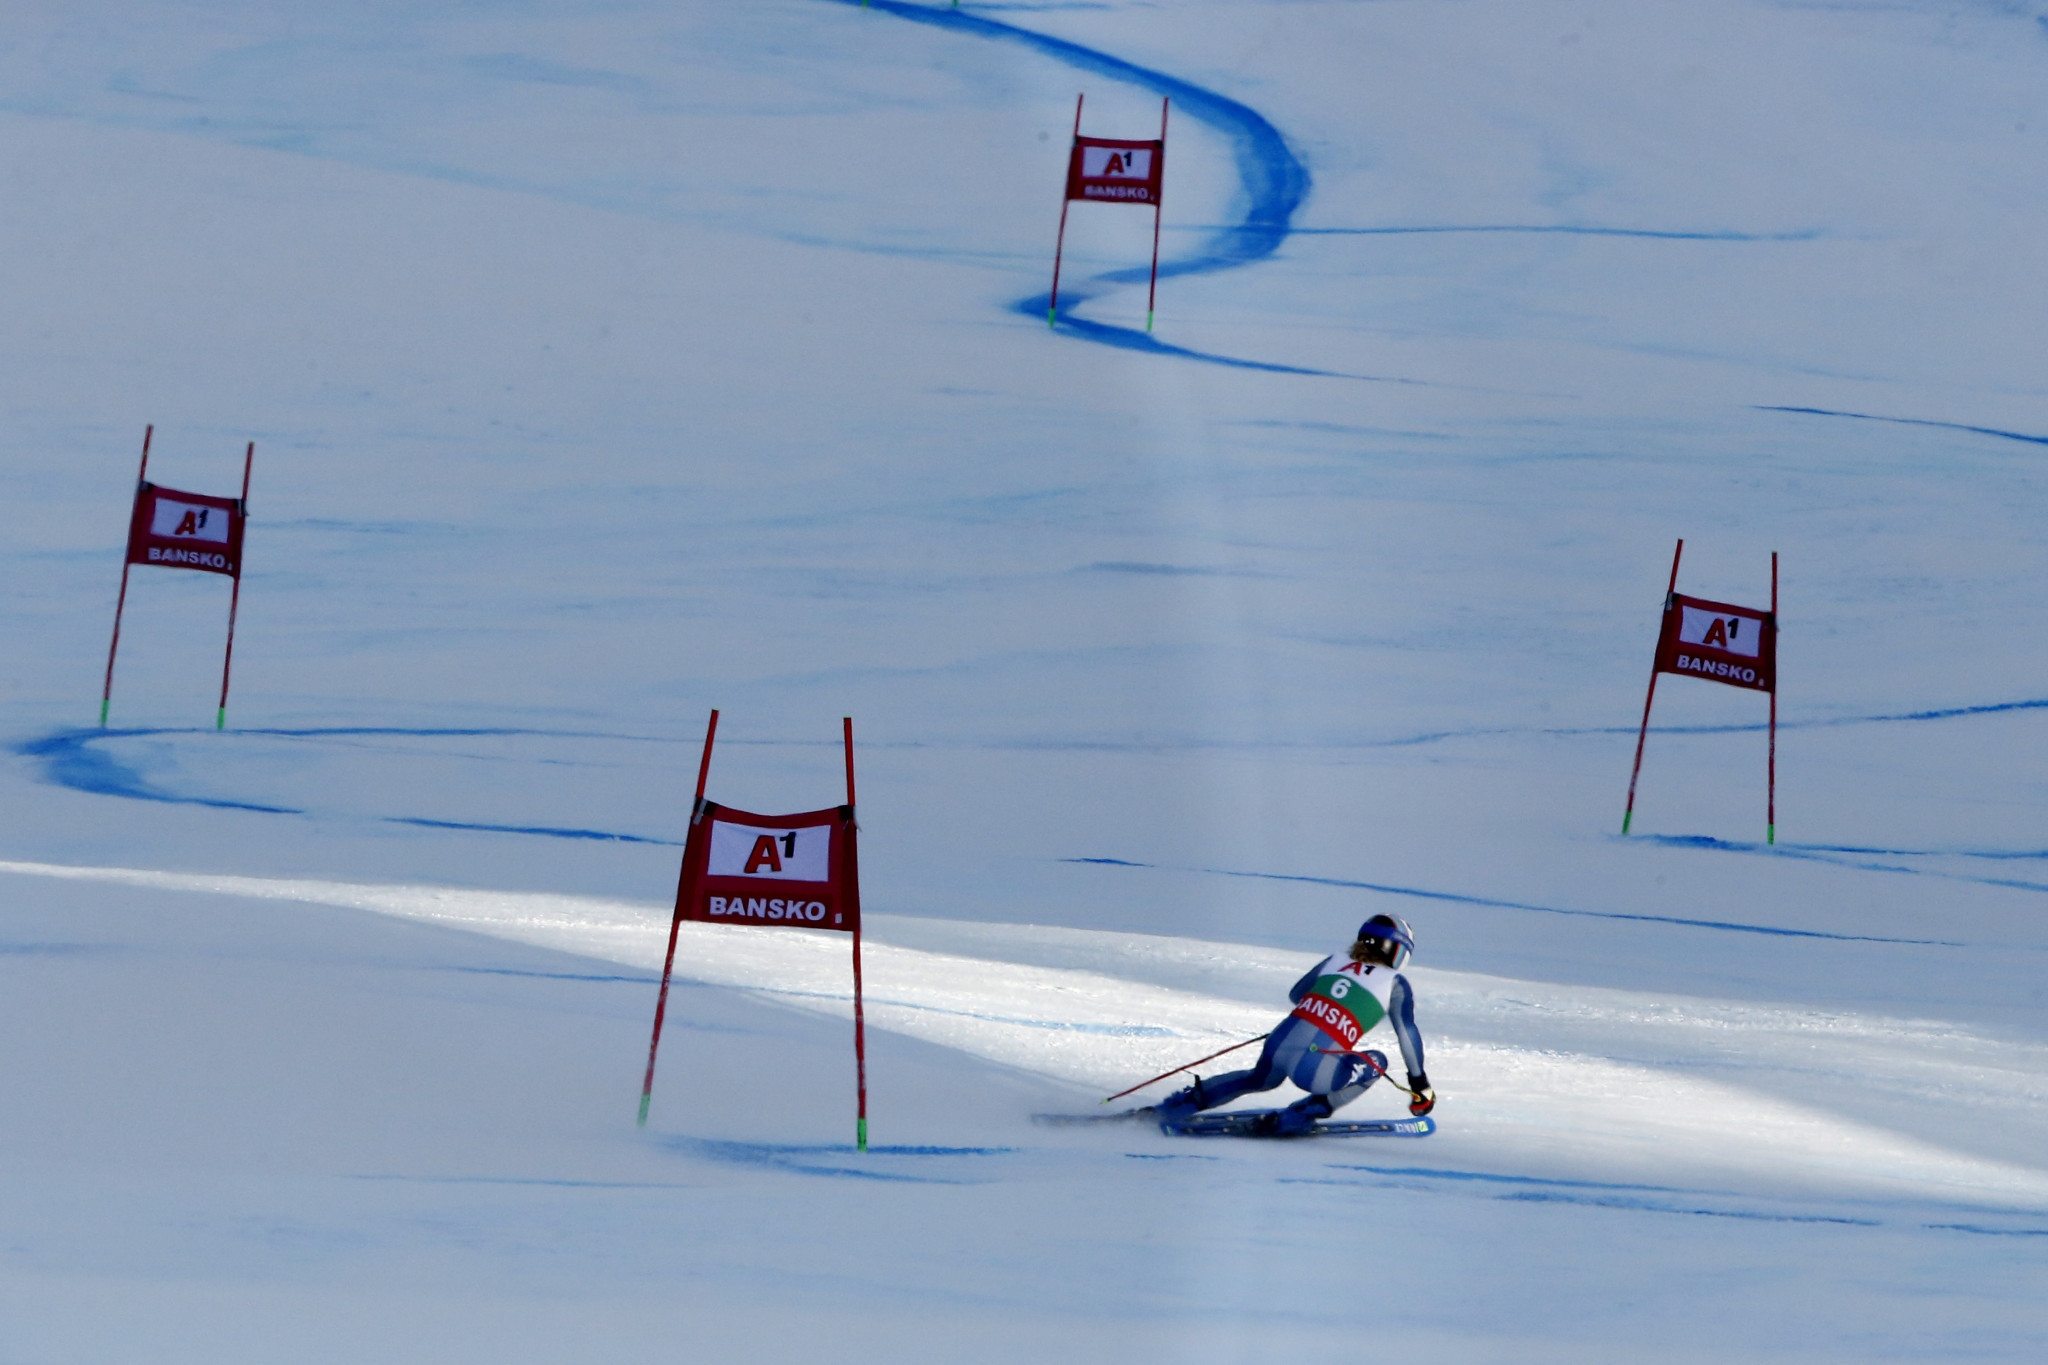 Bansko is set to stage the 2021 Alpine Junior World Ski Championships ©Getty Images